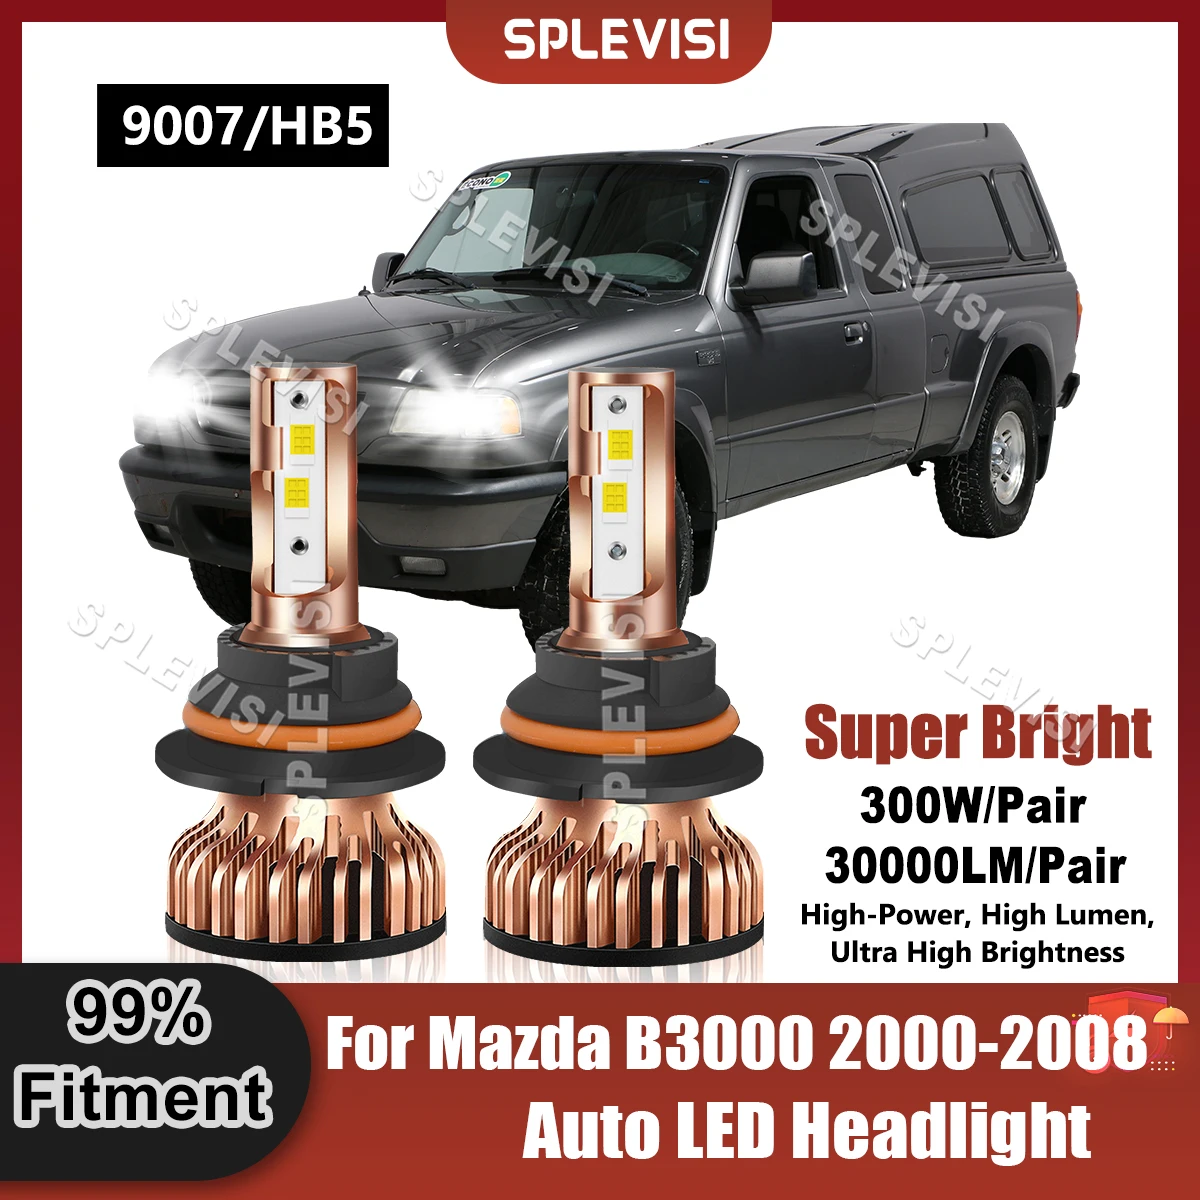 

400% Brightness 9007/HB5 LED Headlight Bulbs 9V-24V 300W 30000LM For Mazda B3000 2000 2001 2002 2003 2004 2005 2006 2007 2008